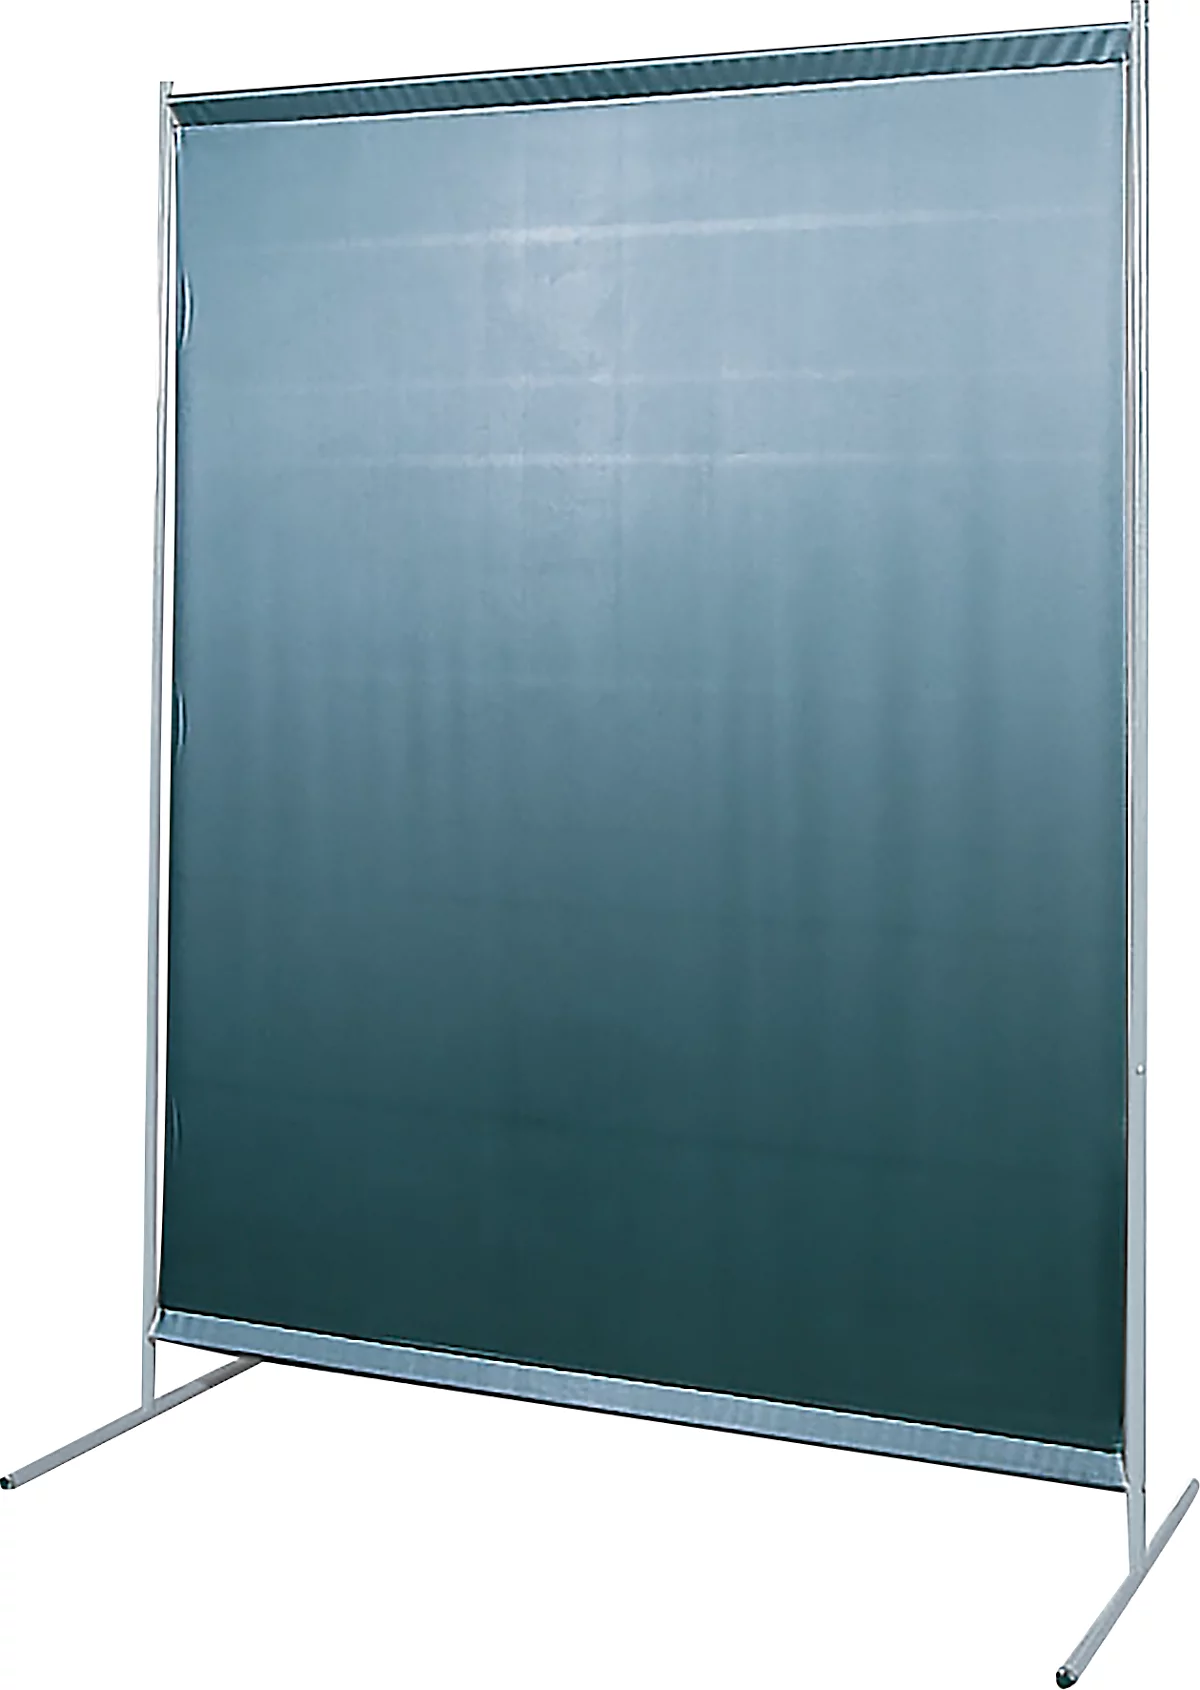 Pantalla protectora para soldadura, de 1 pieza, cortina de lámina de 0,4 mm de grosor, DIN EN ISO 25980, An 1450 x P 600 x Al 1900 mm, azul/verde oscuro